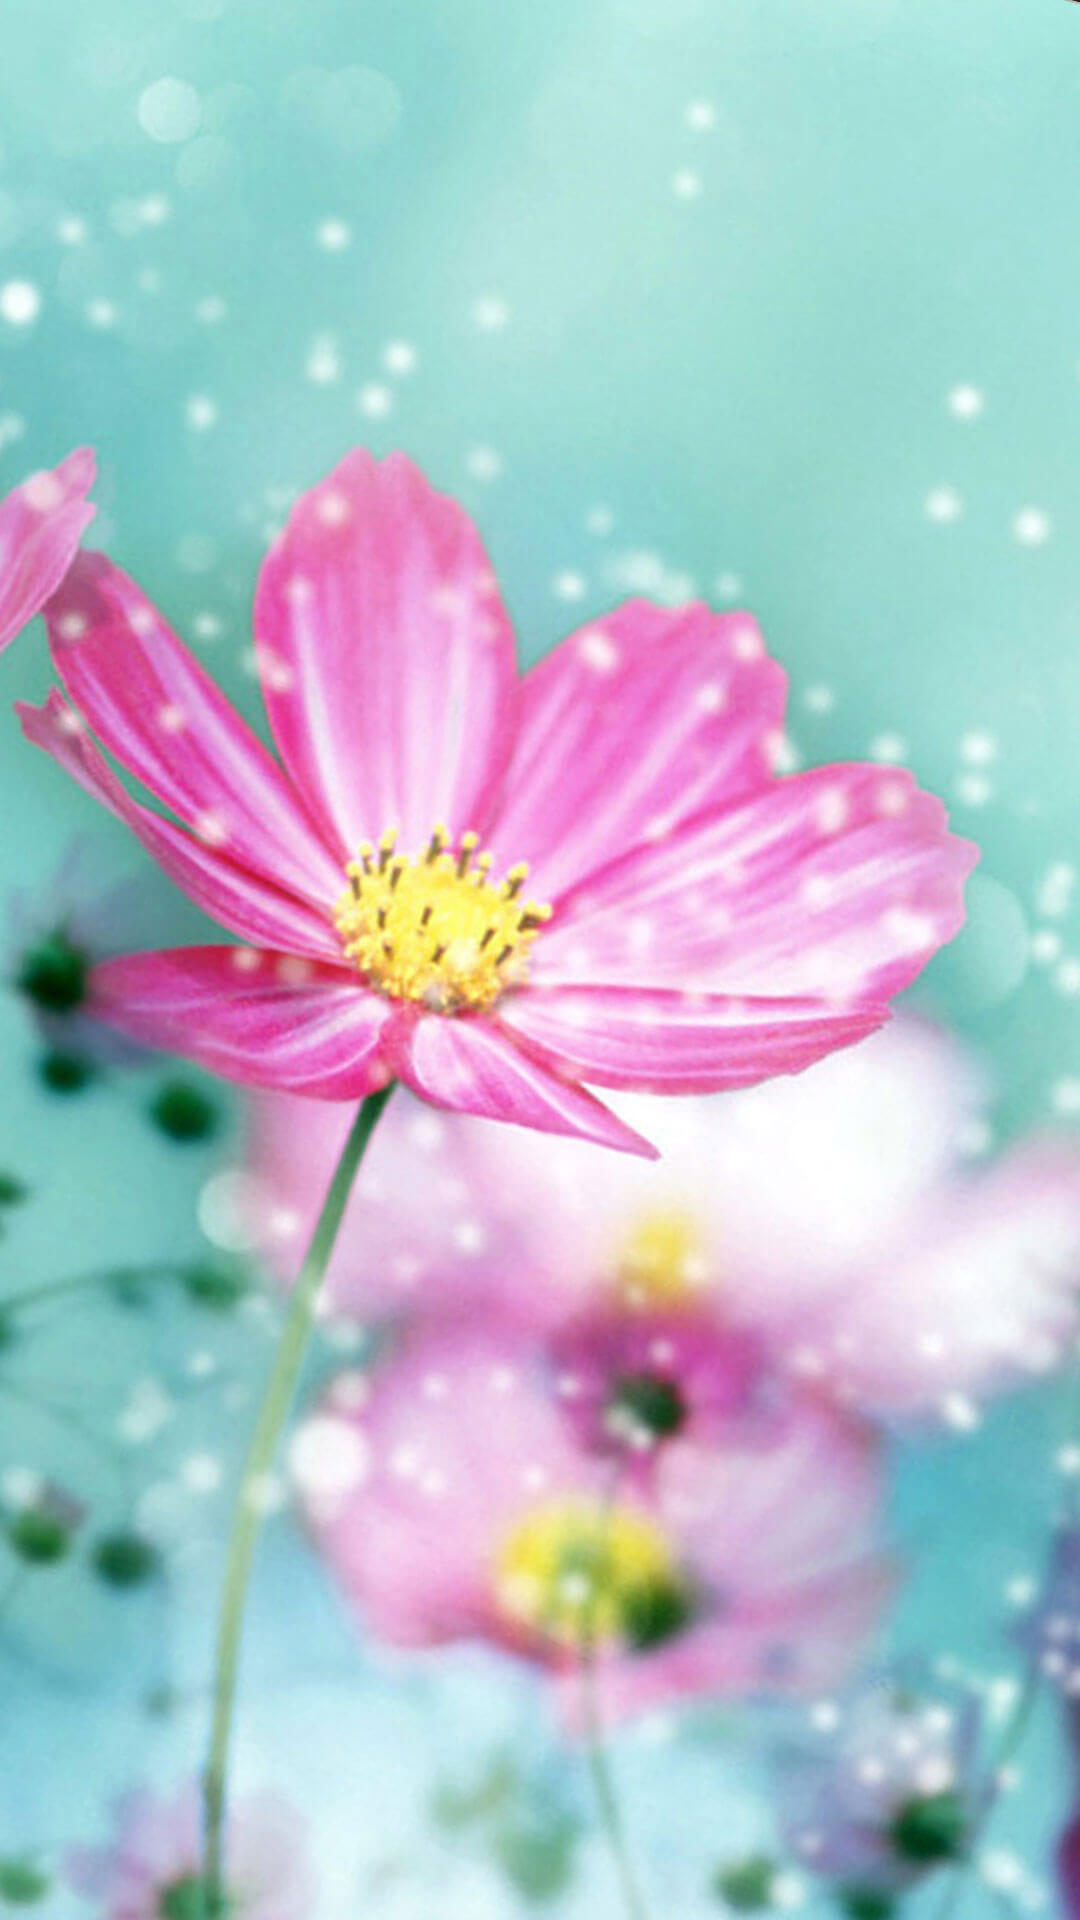 flower background hd wallpaper,flower,flowering plant,petal,pink,cosmos